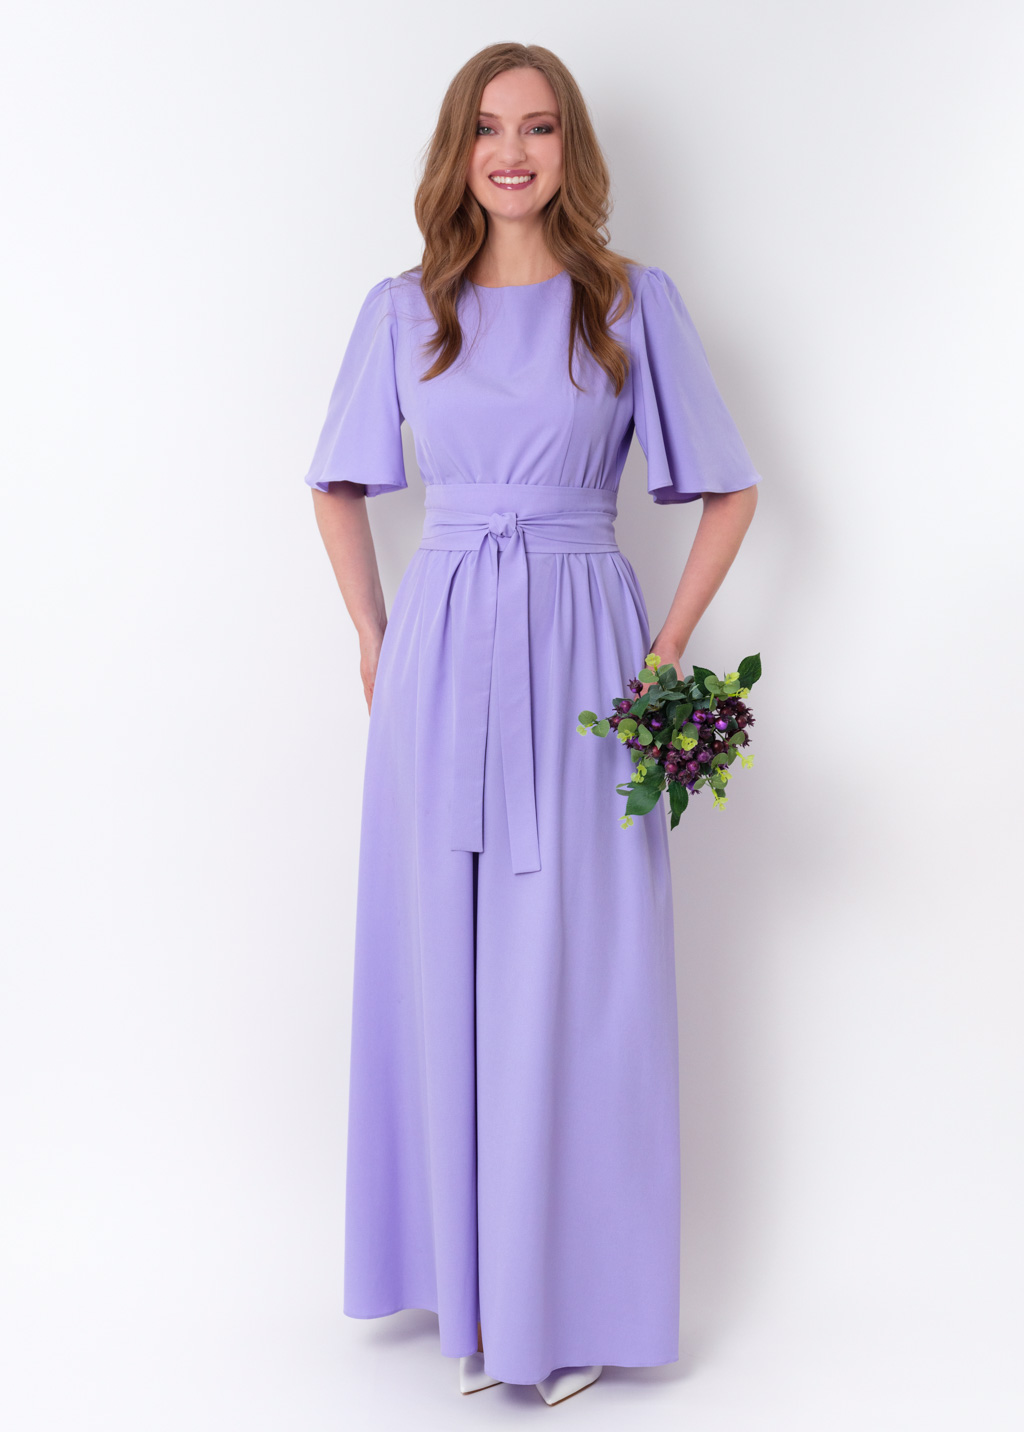 Light purple long dress with belt